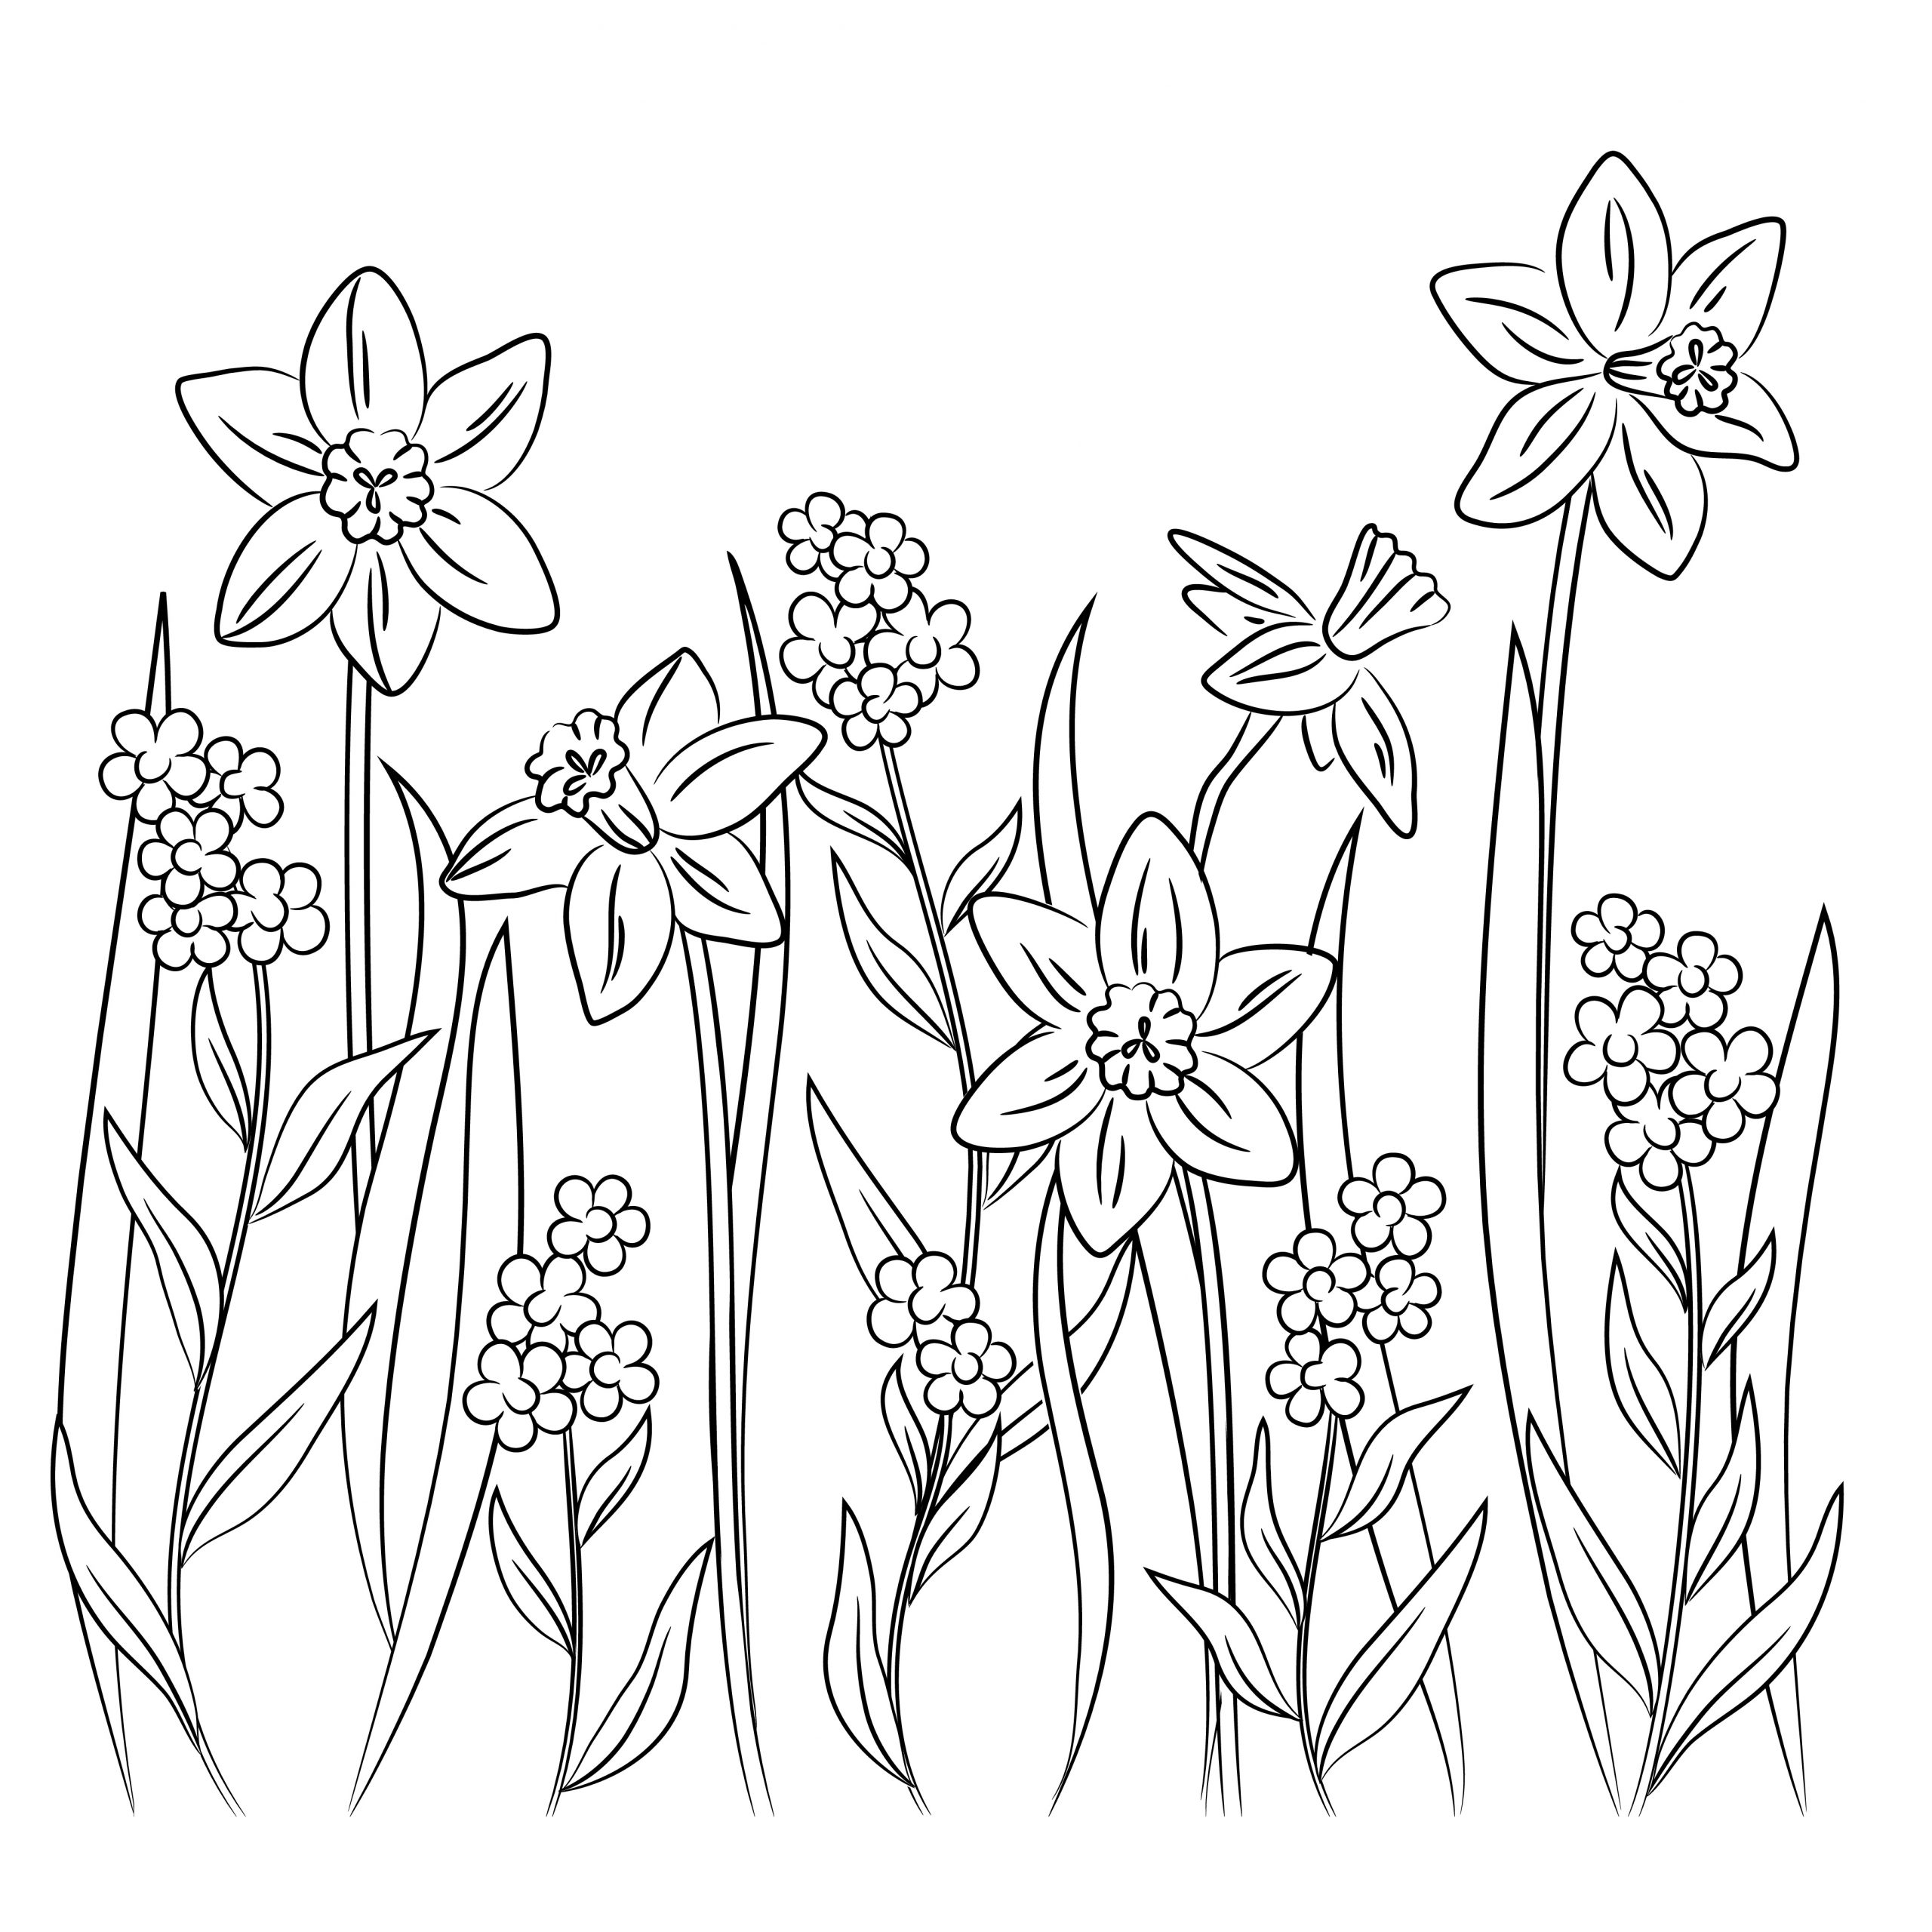 Daffodils coloring sheet